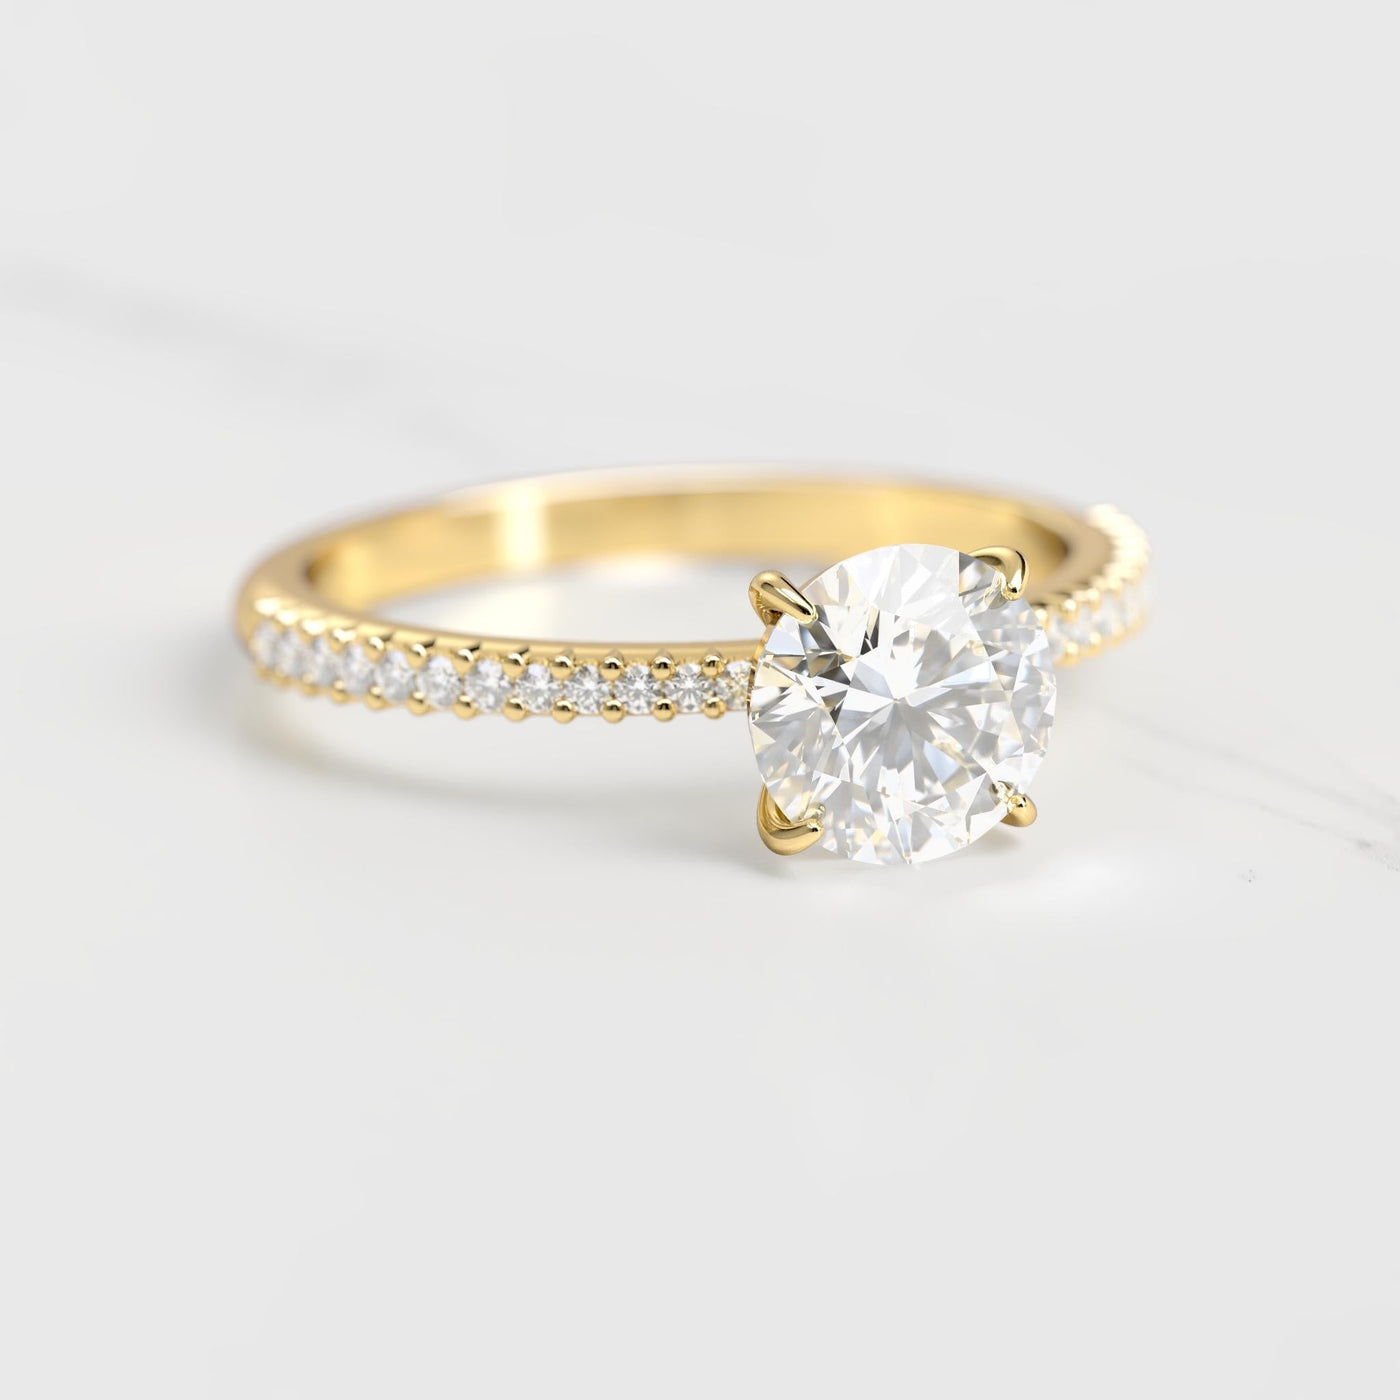 Round half pave tapered diamond eternity ring